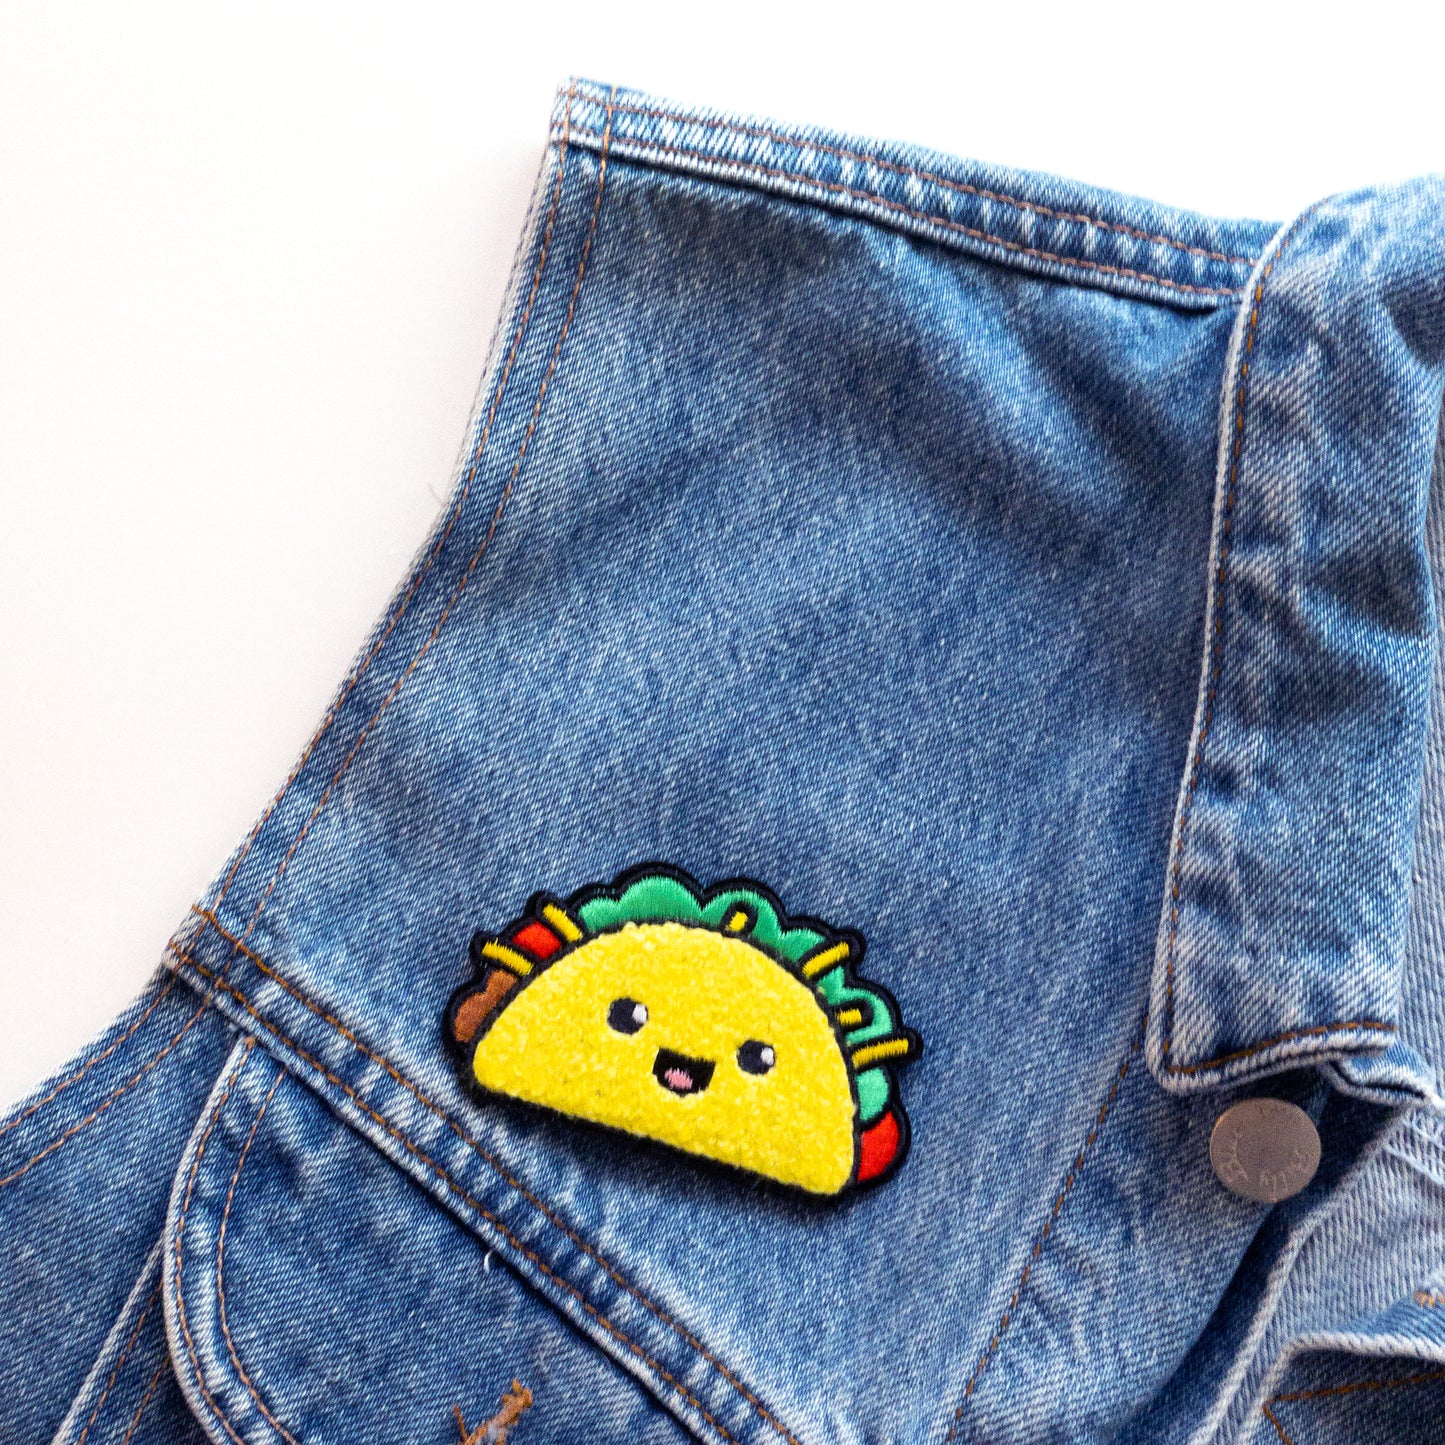 Taco iron on chenille patch on jean jacket